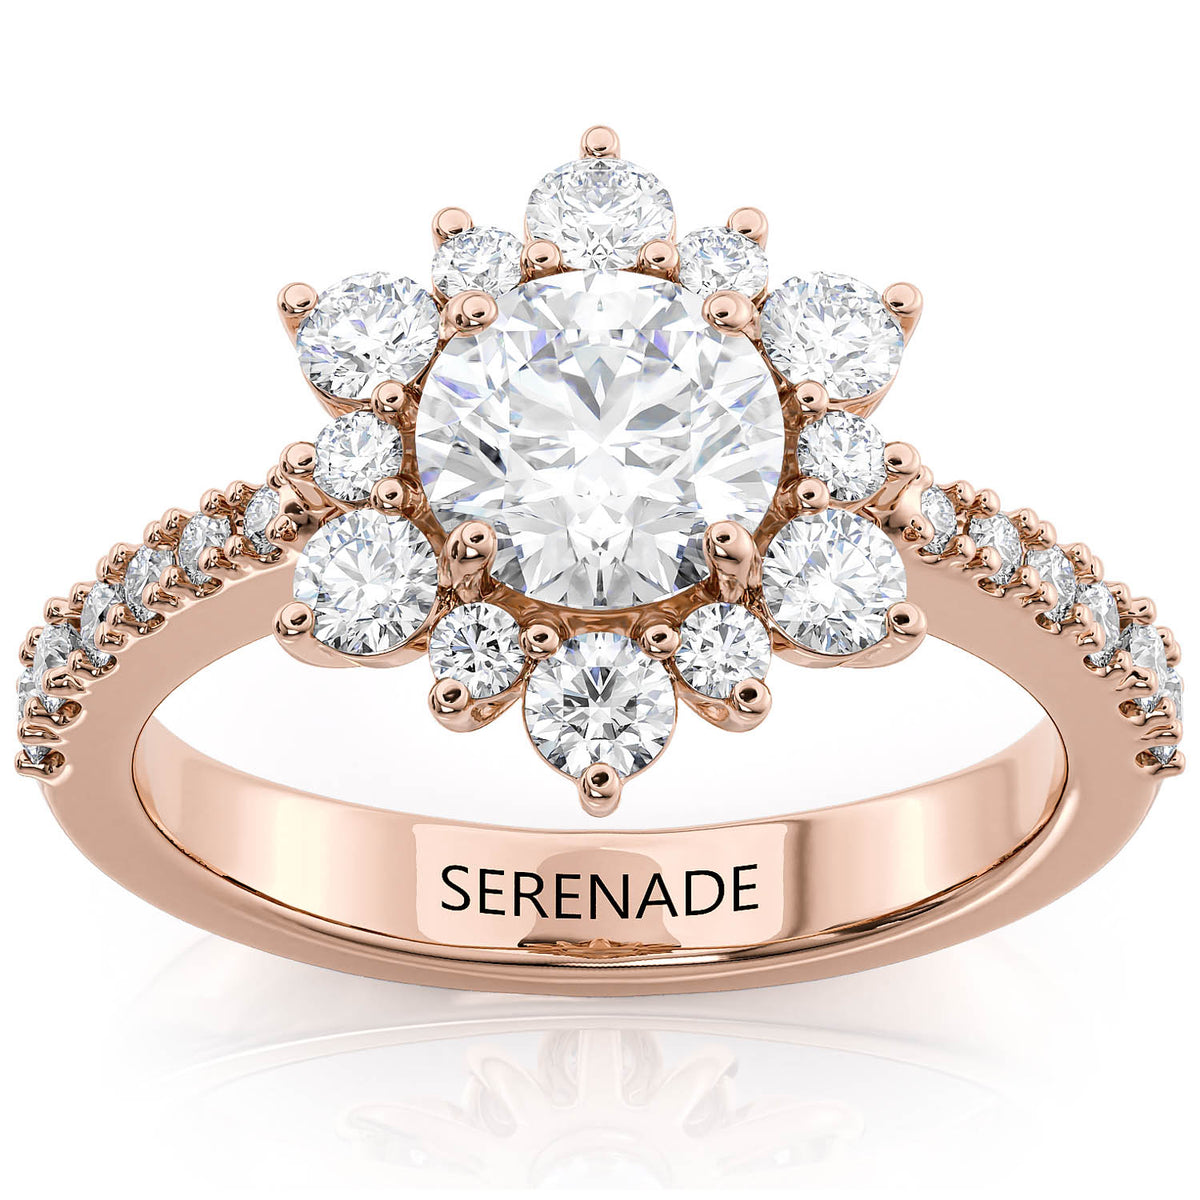 Snowflake Inspired Diamond Halo Moissanite Engagement Ring - Snowflake